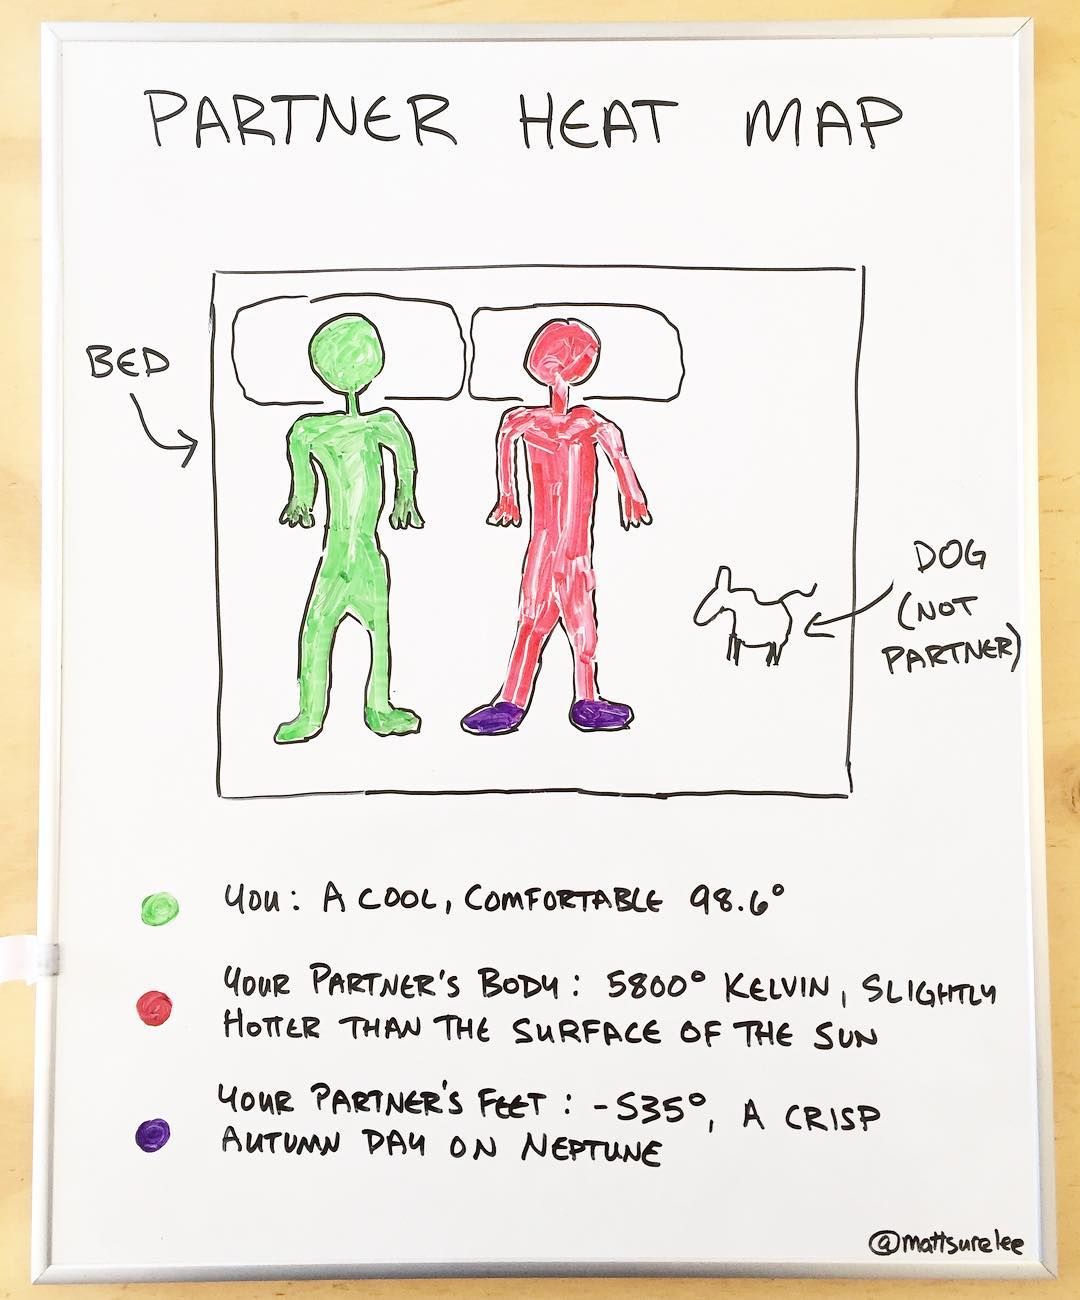 Partner heat map